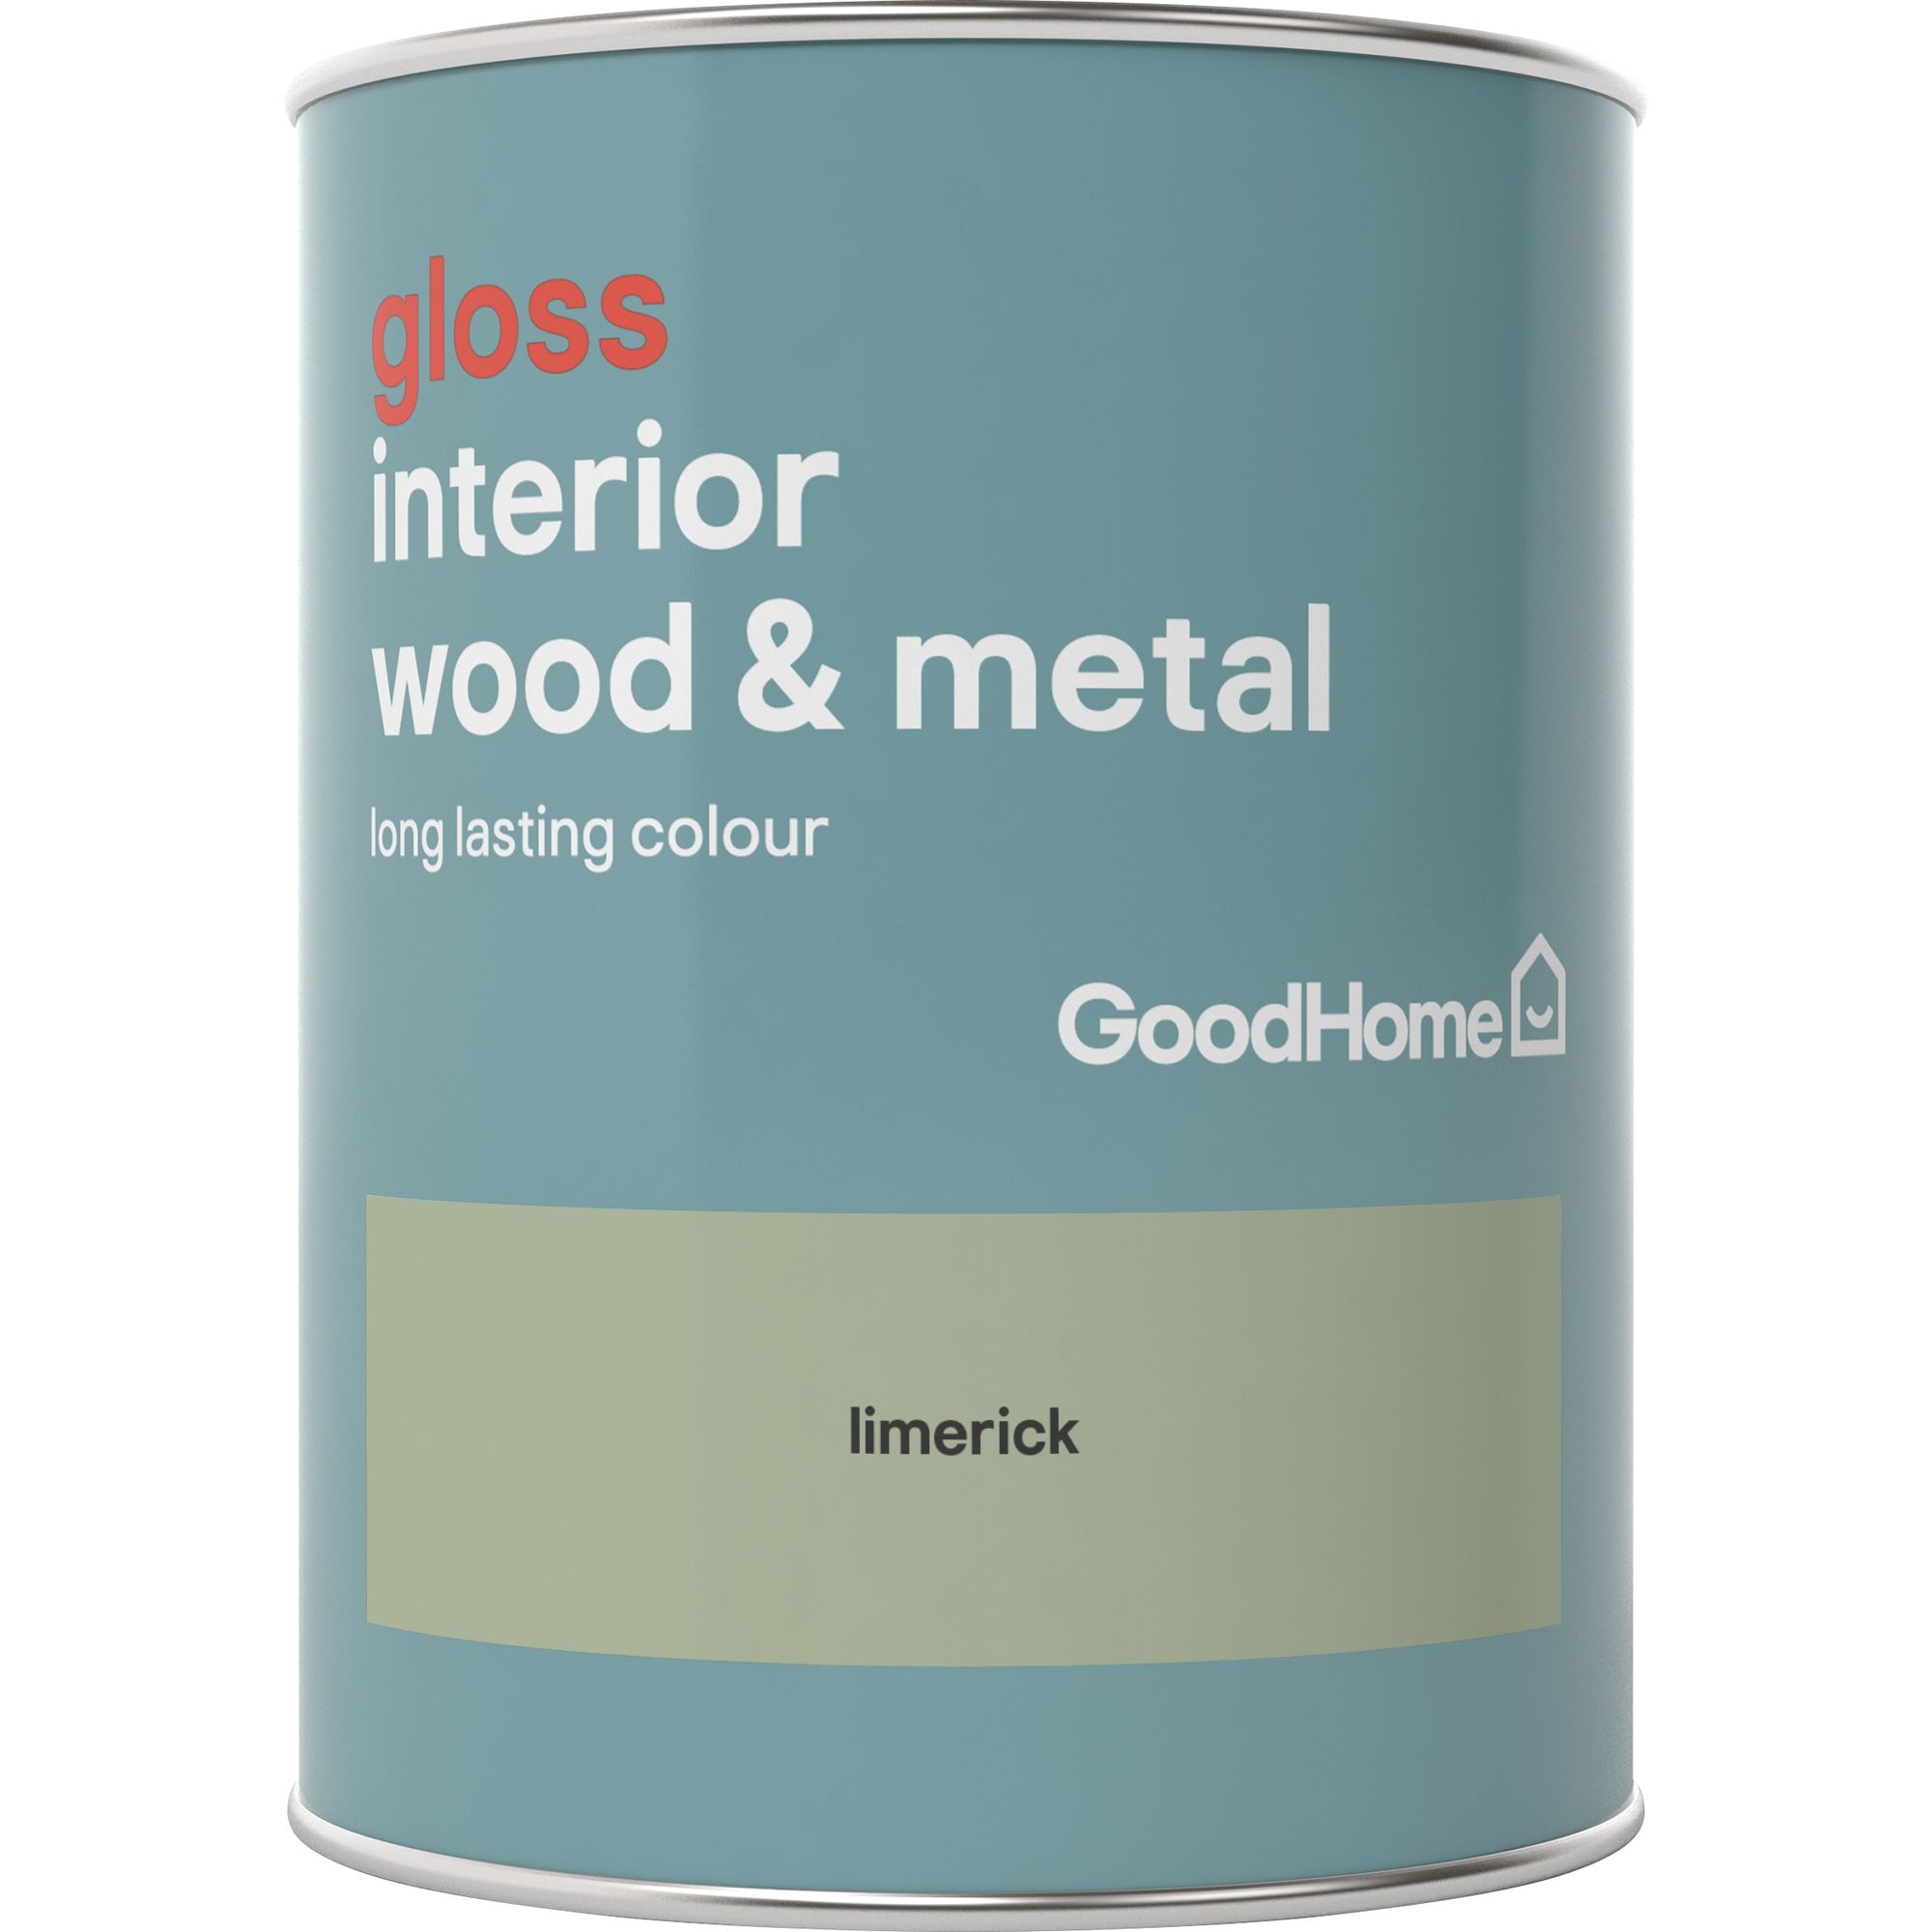 GoodHome Limerick Gloss Metal & wood paint, 750ml